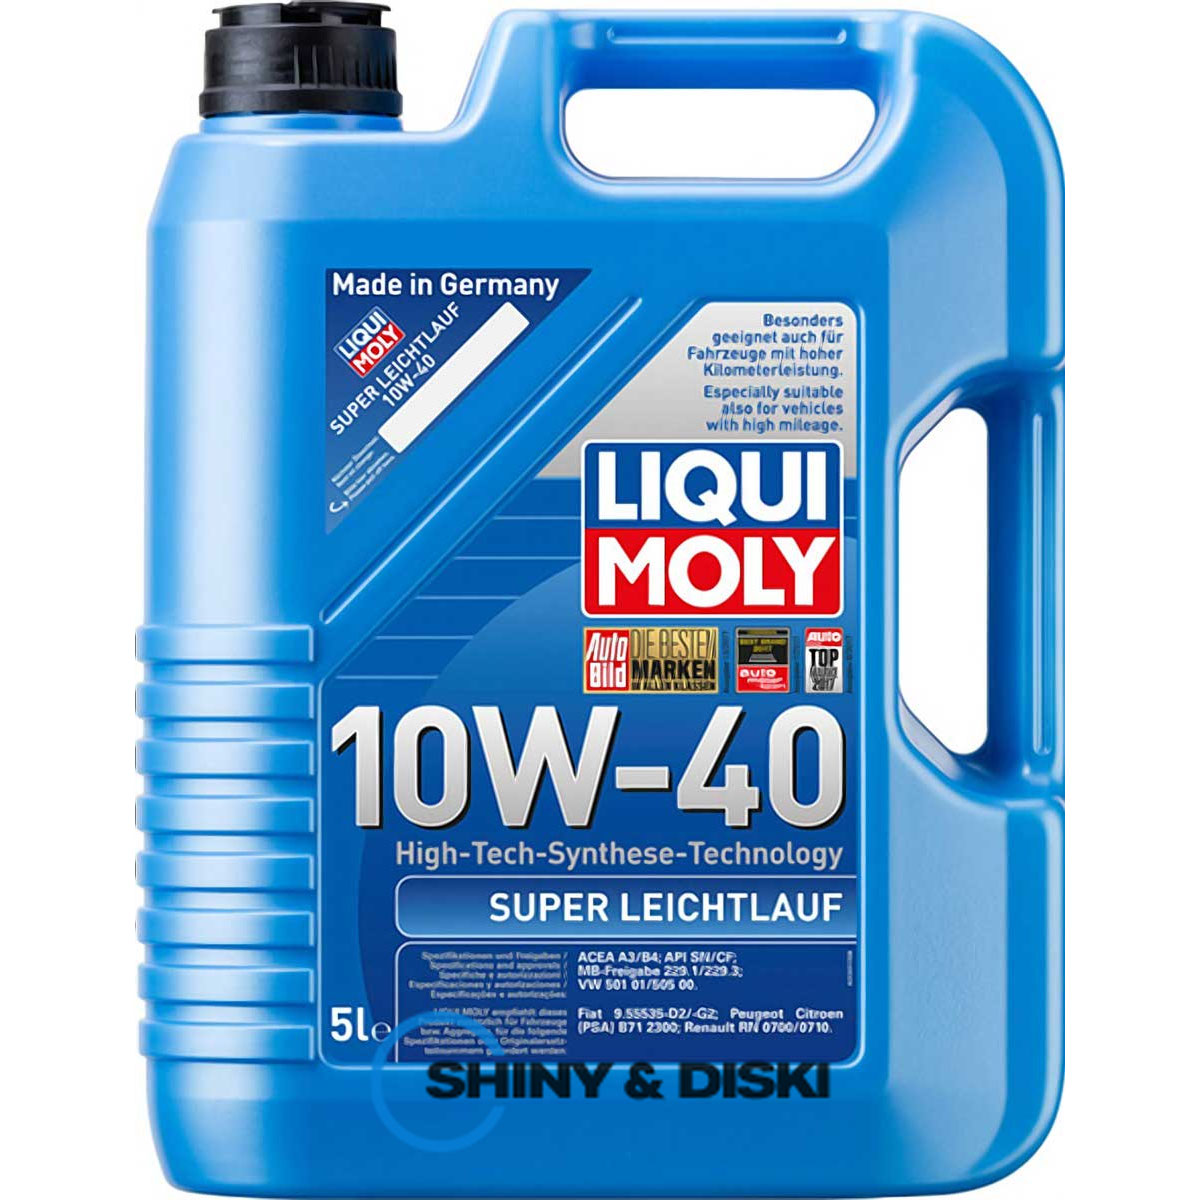 liqui moly super leichtlauf 10w-40 (5л)